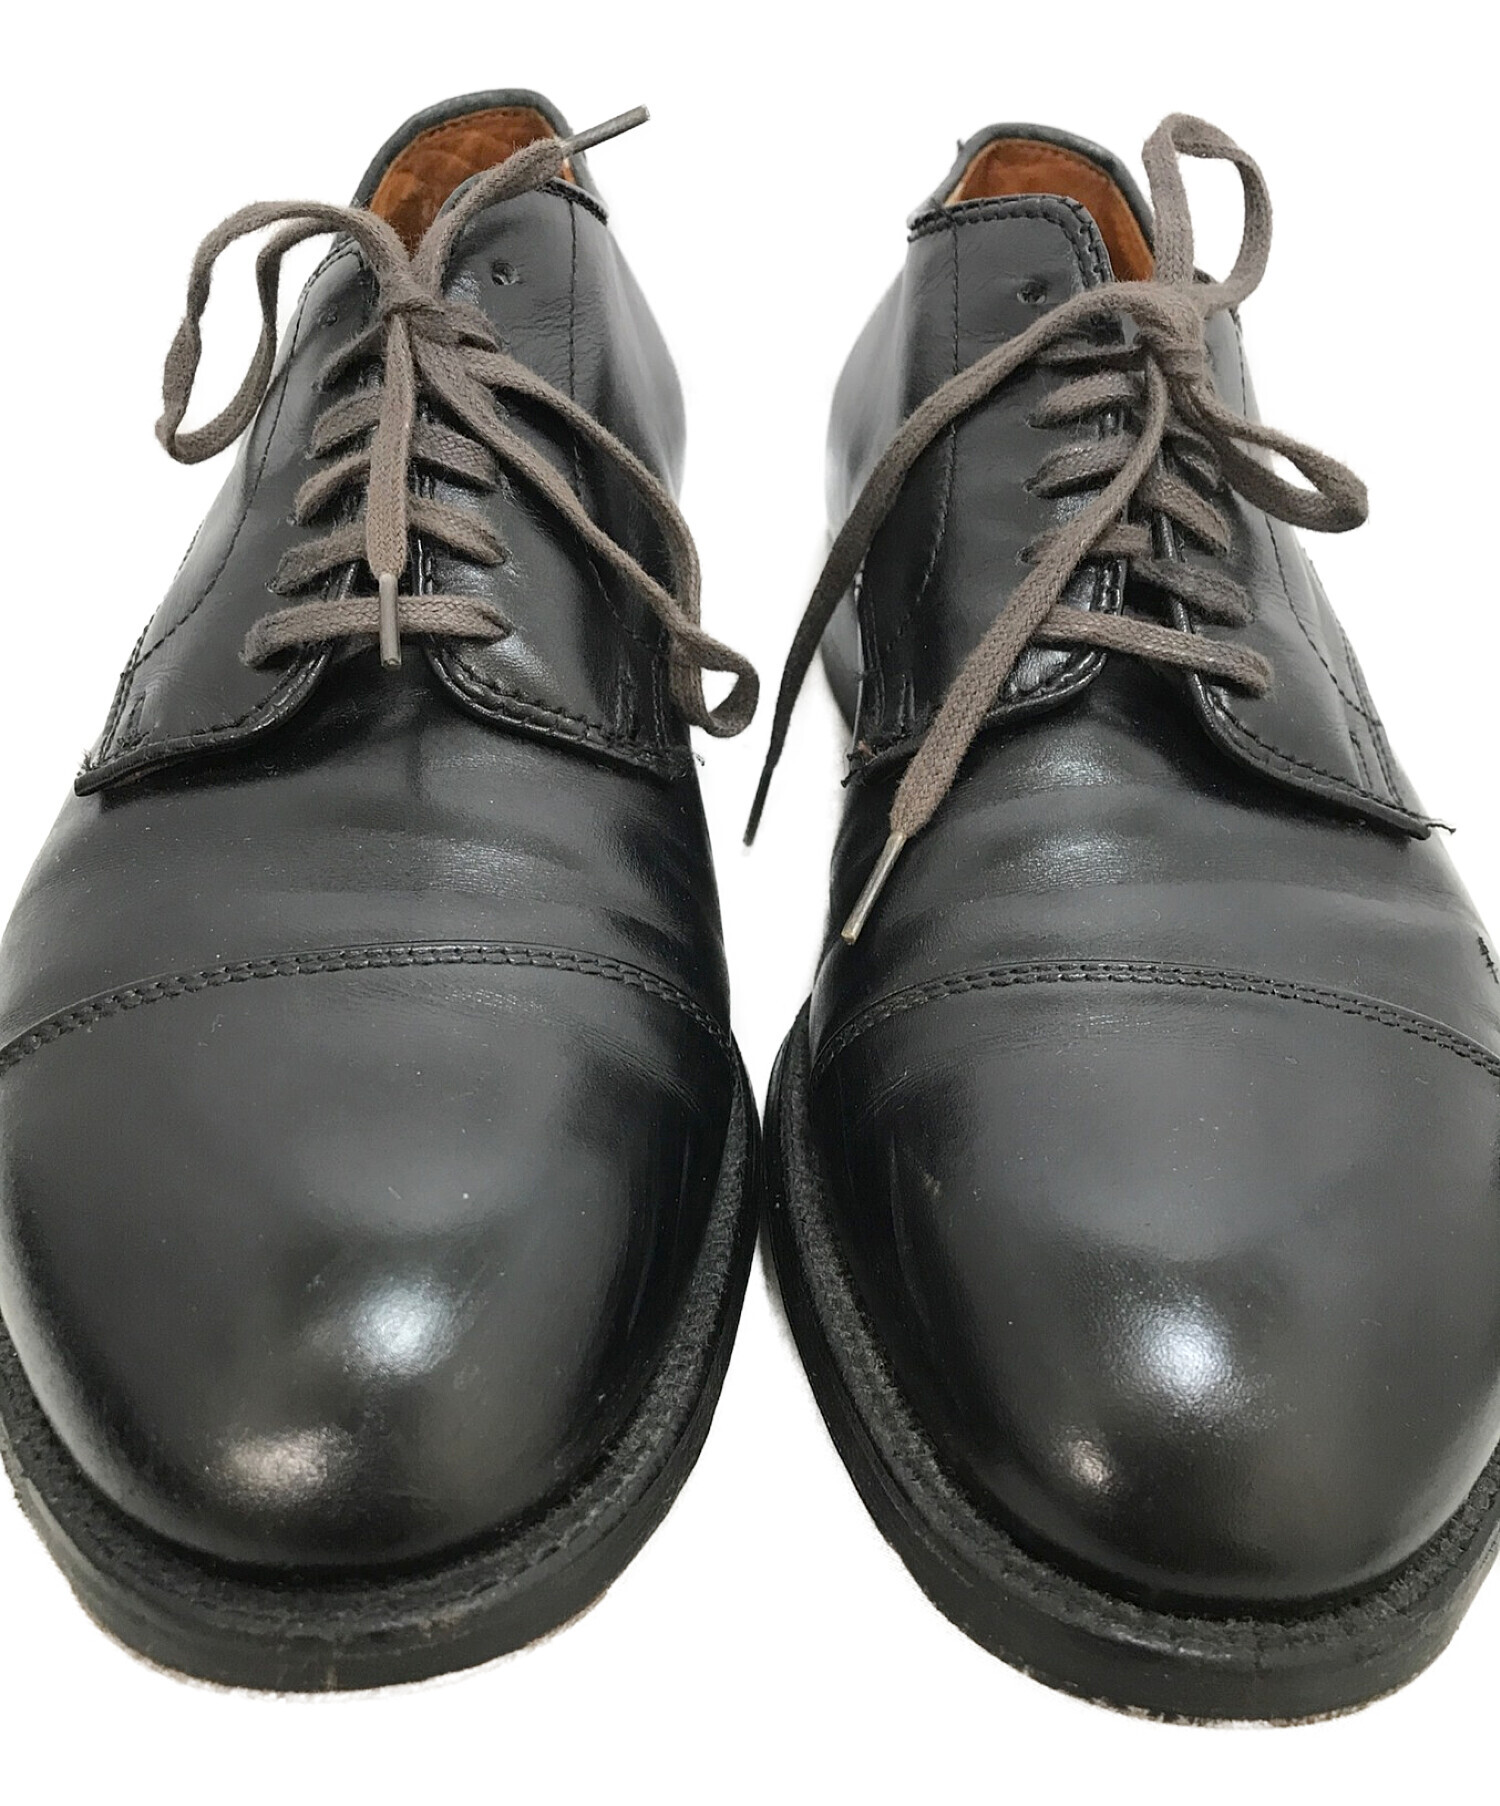 Alden Tricker's 高級靴6足まとめ売り 26.5cm